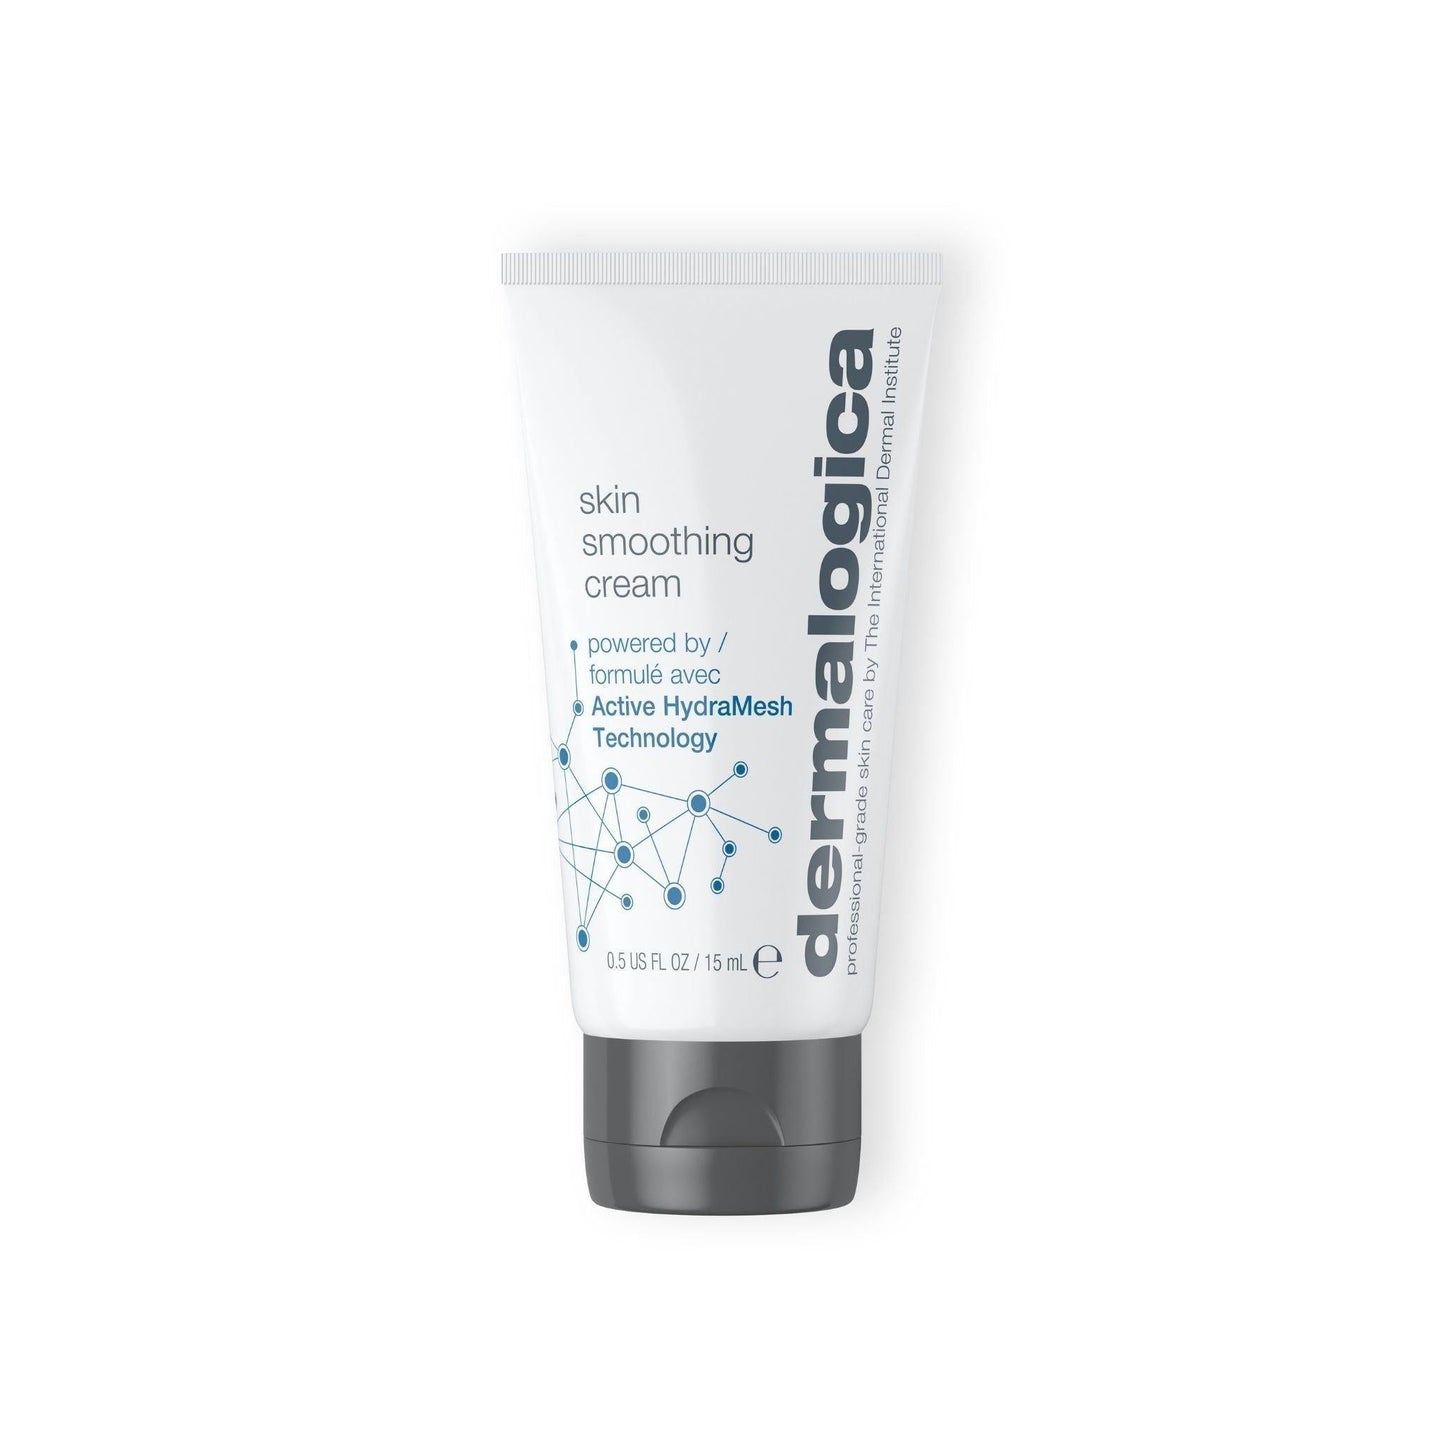 skin smoothing cream 2.0 15ml - Dermalogica Indonesia